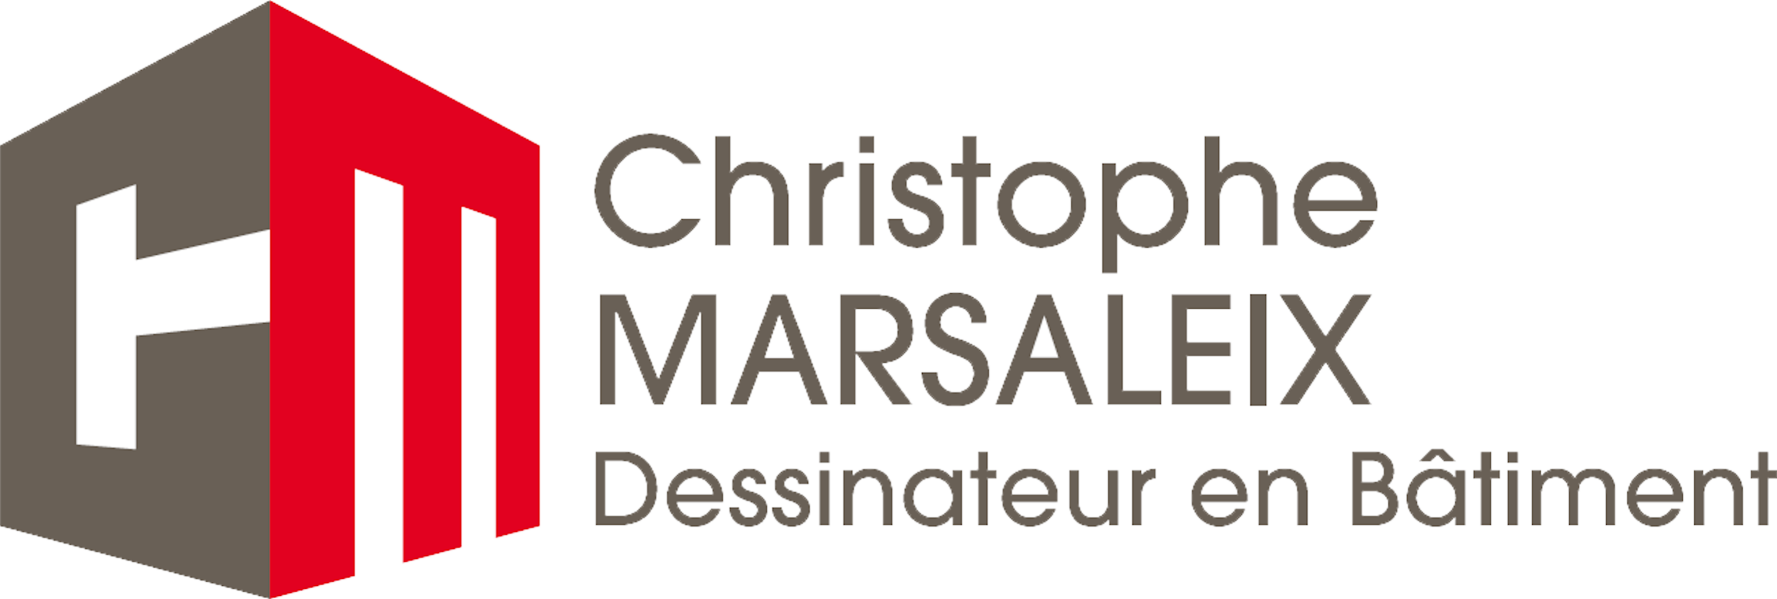 Christophe Marsaleix - CONDITIONS GENERALES D'UTILISATION (CGU)